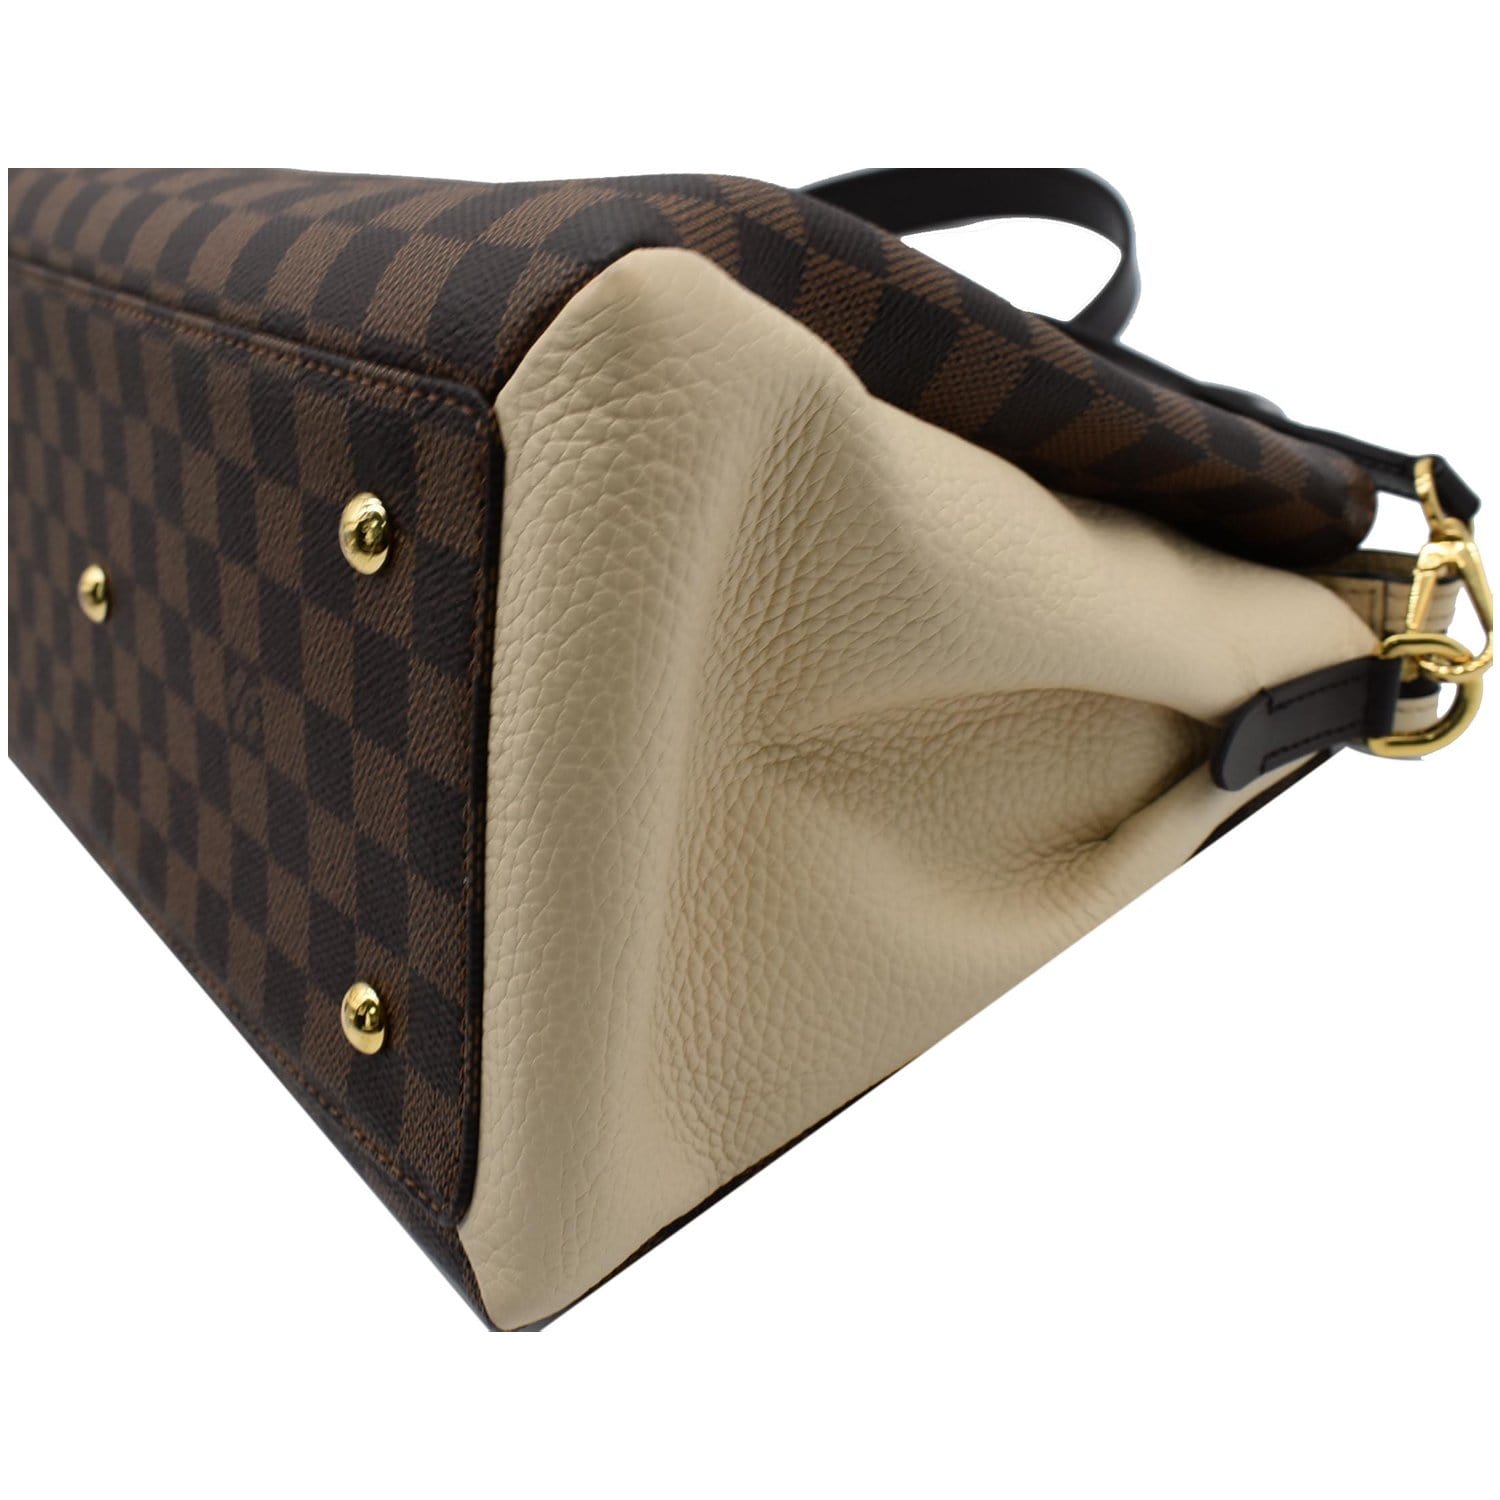 Brown Louis Vuitton Damier Ebene Shearling Normandy Bag